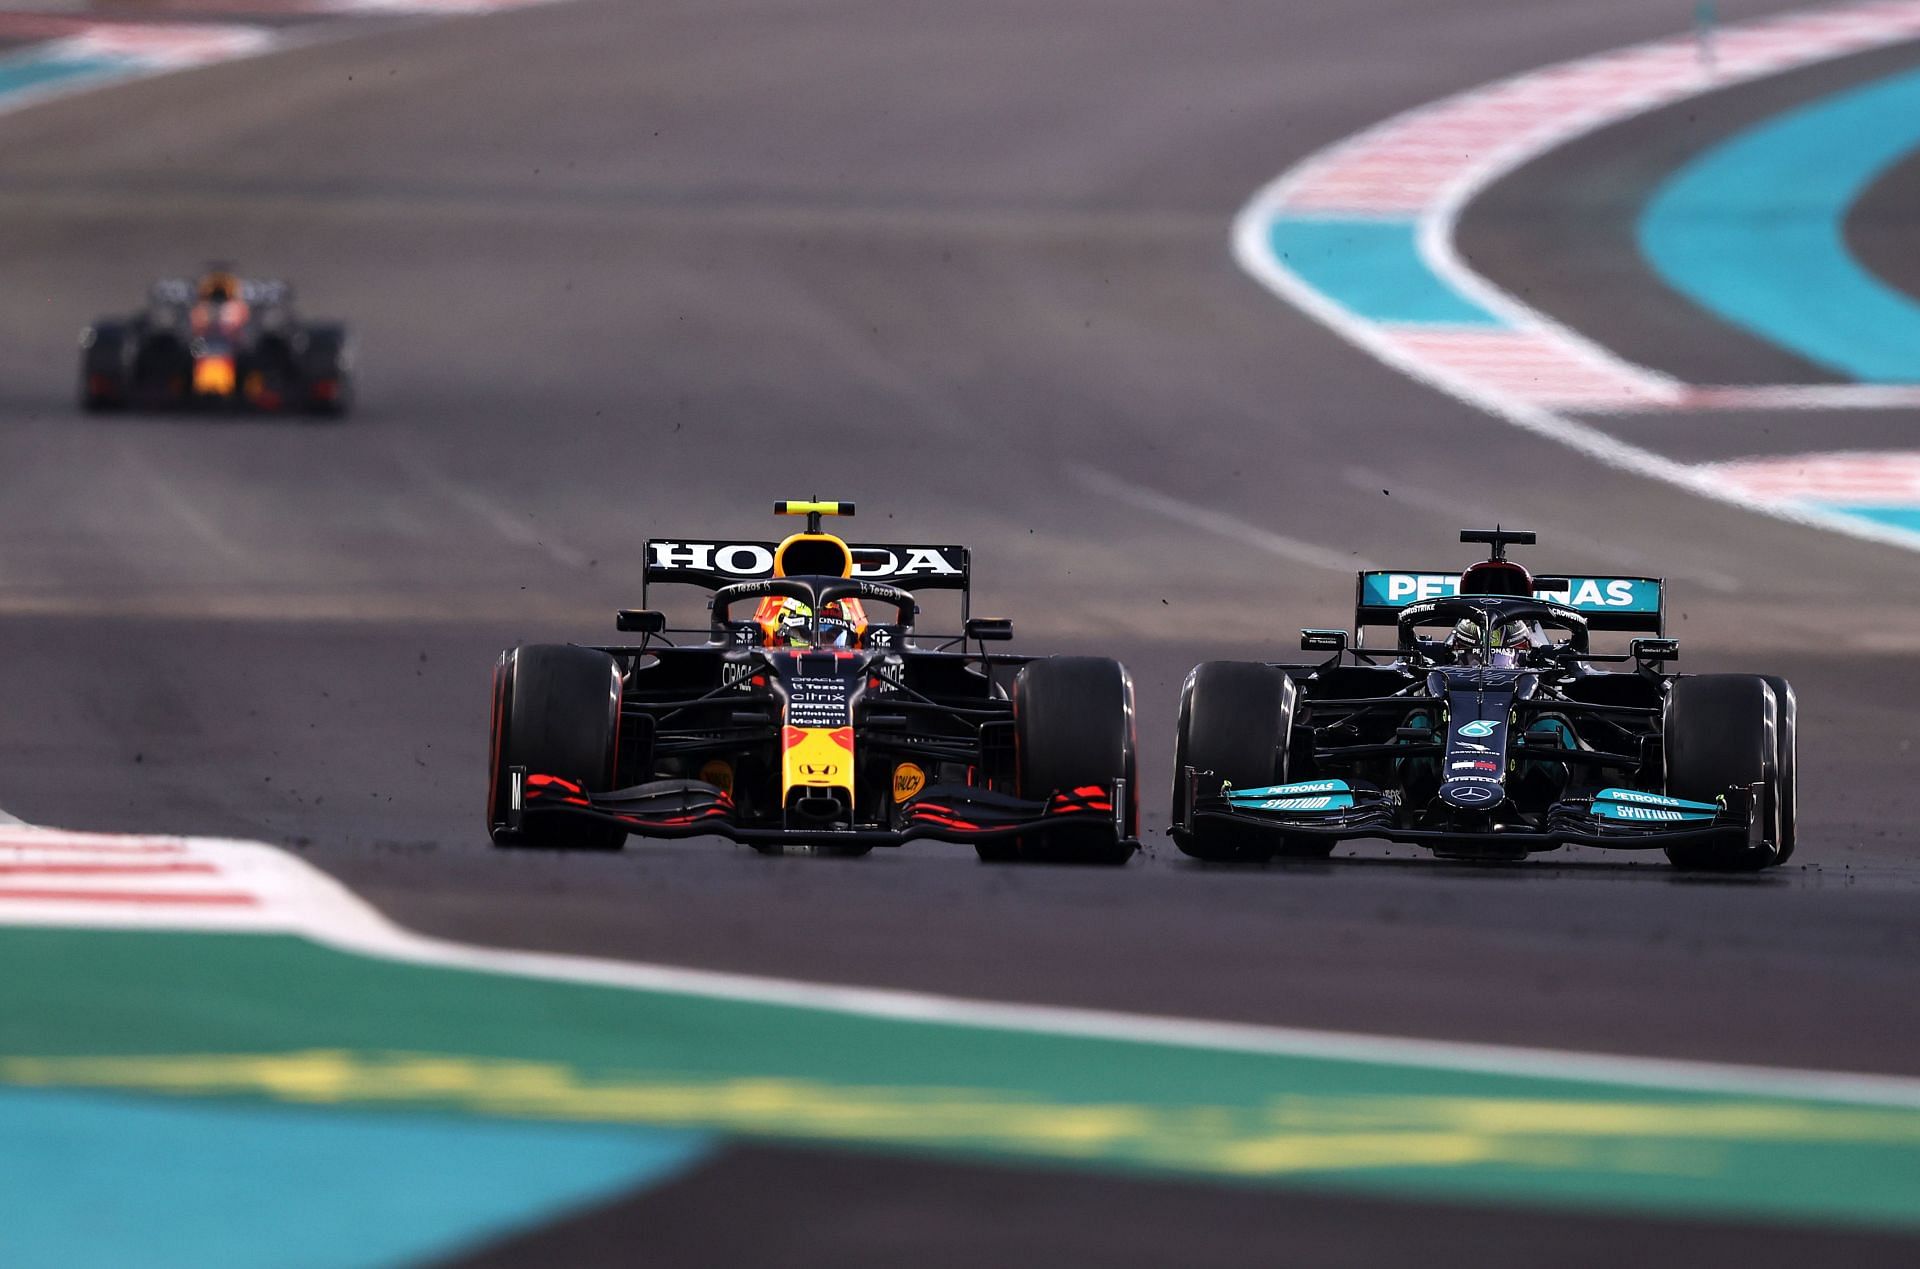 F1 Grand Prix of Abu Dhabi - Max and Lewis